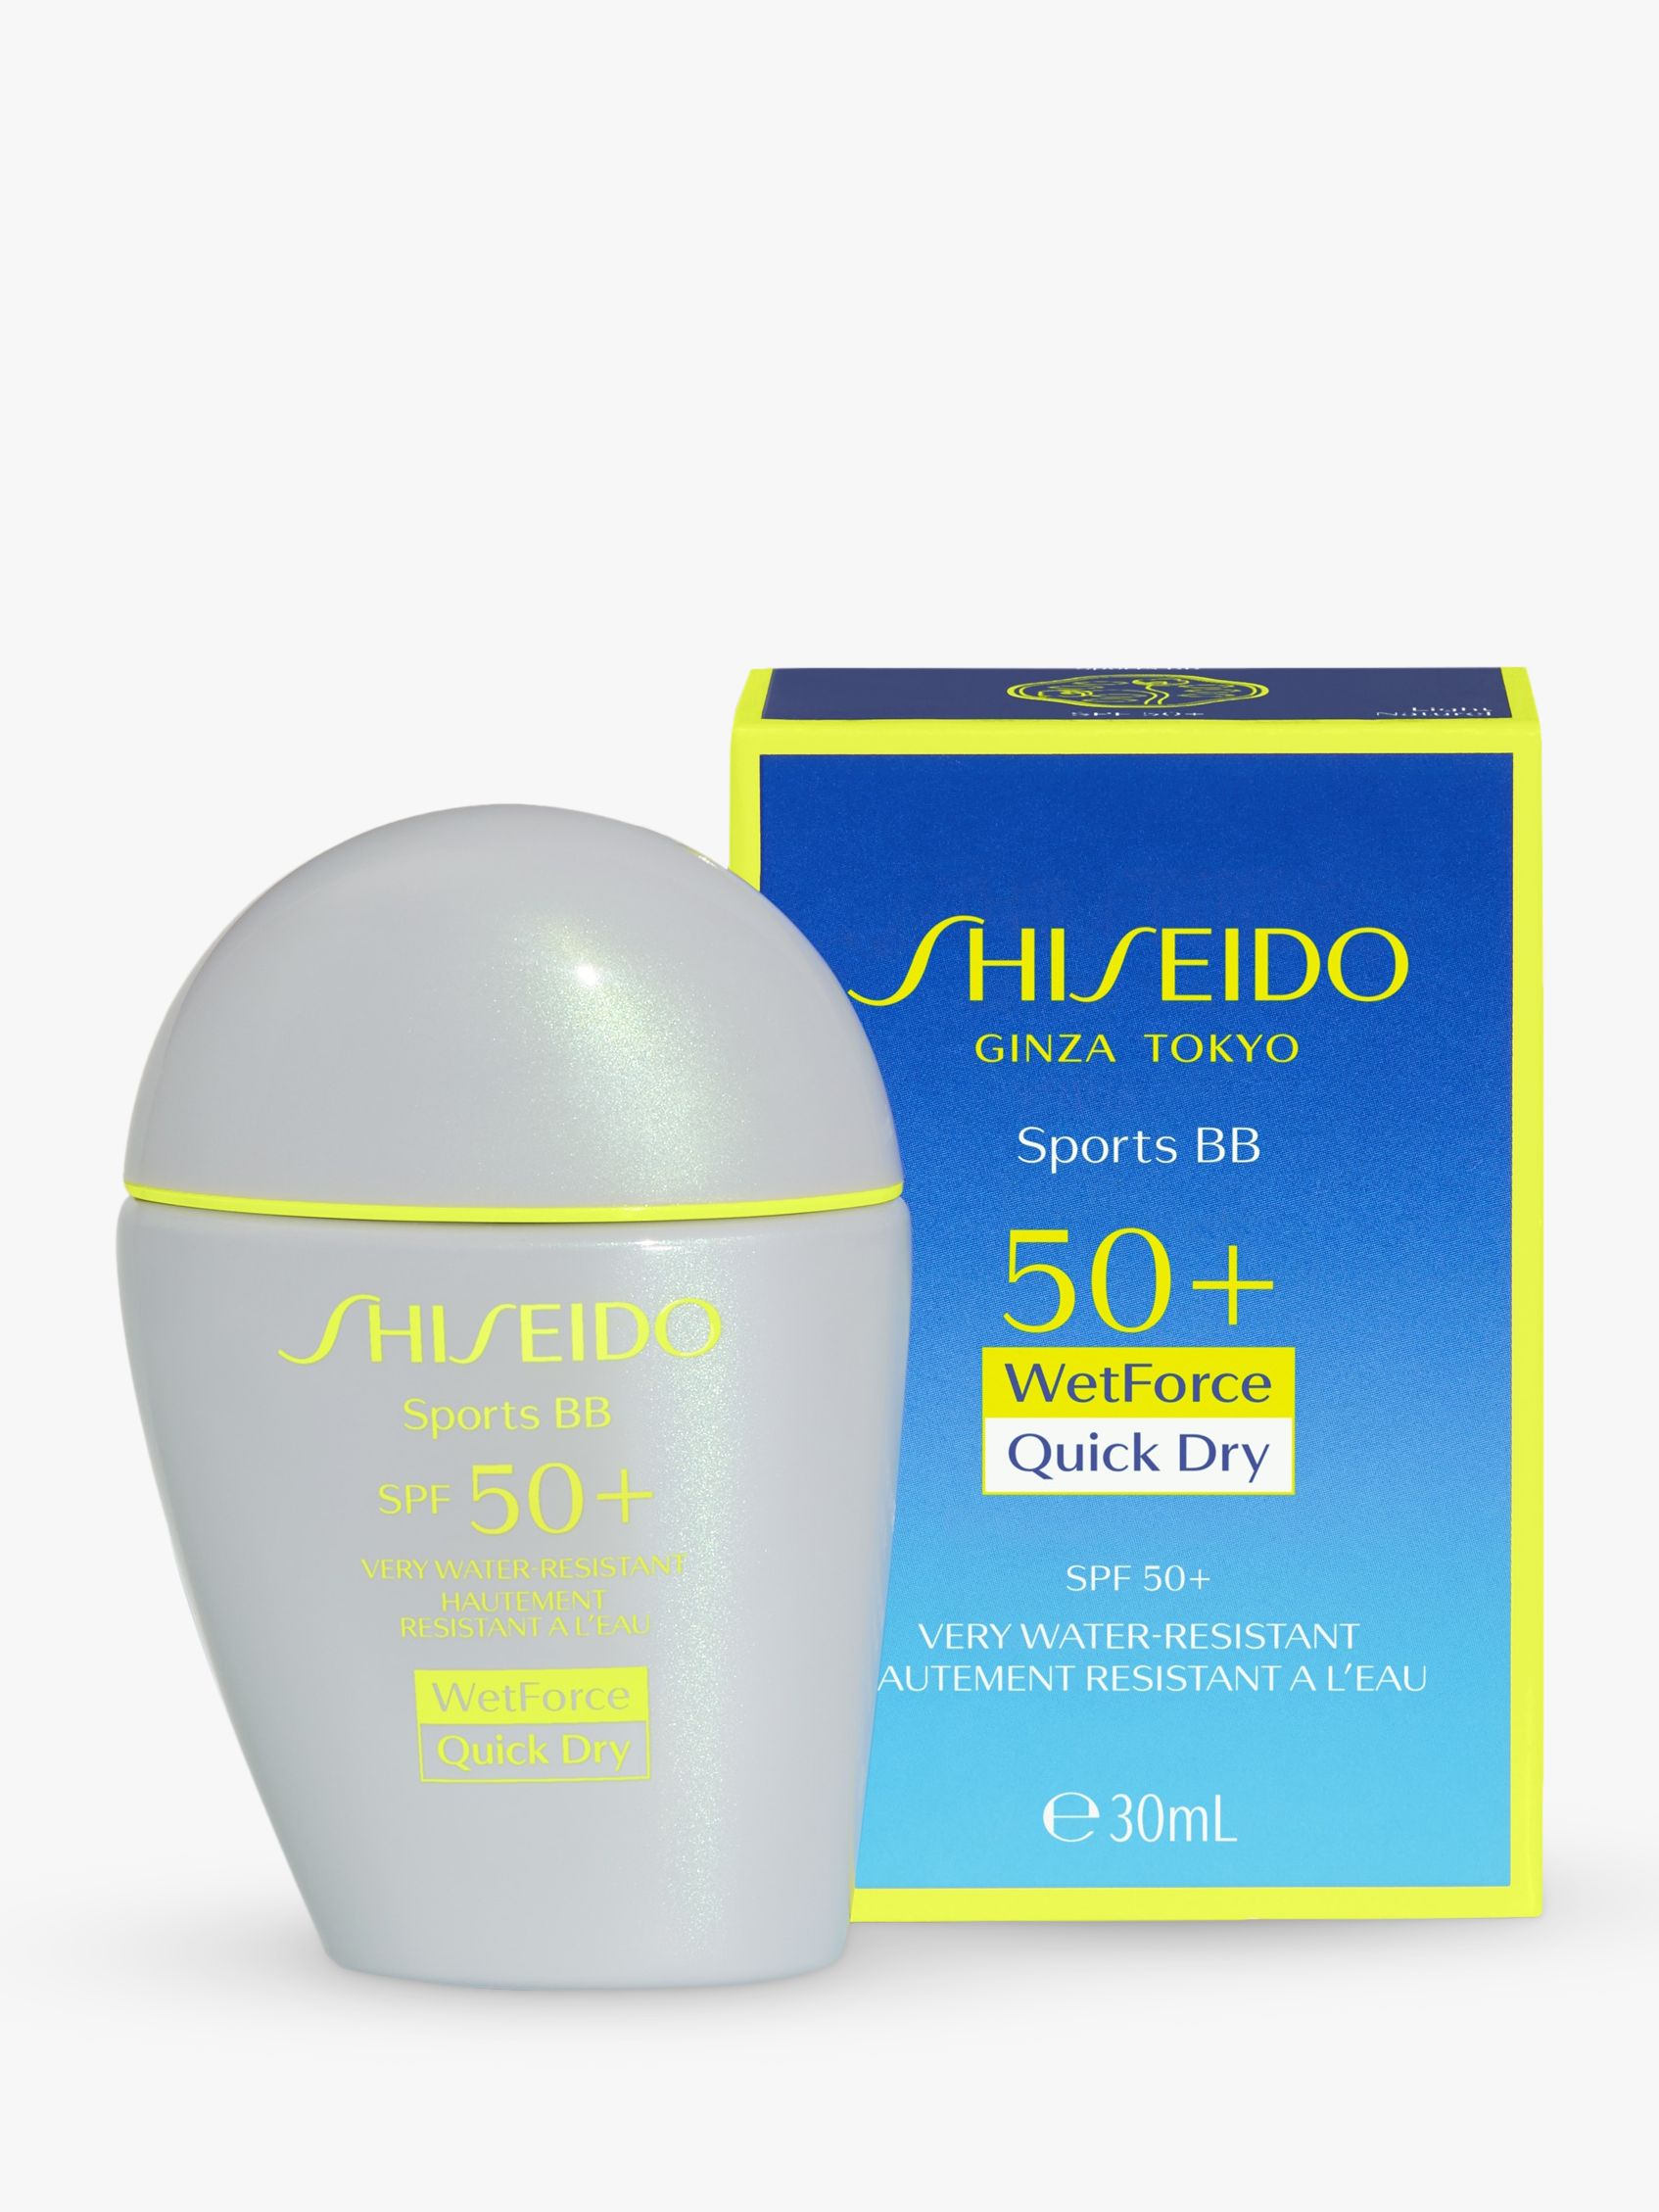 Shiseido Sports BB Fluid SPF 50+, Medium 2